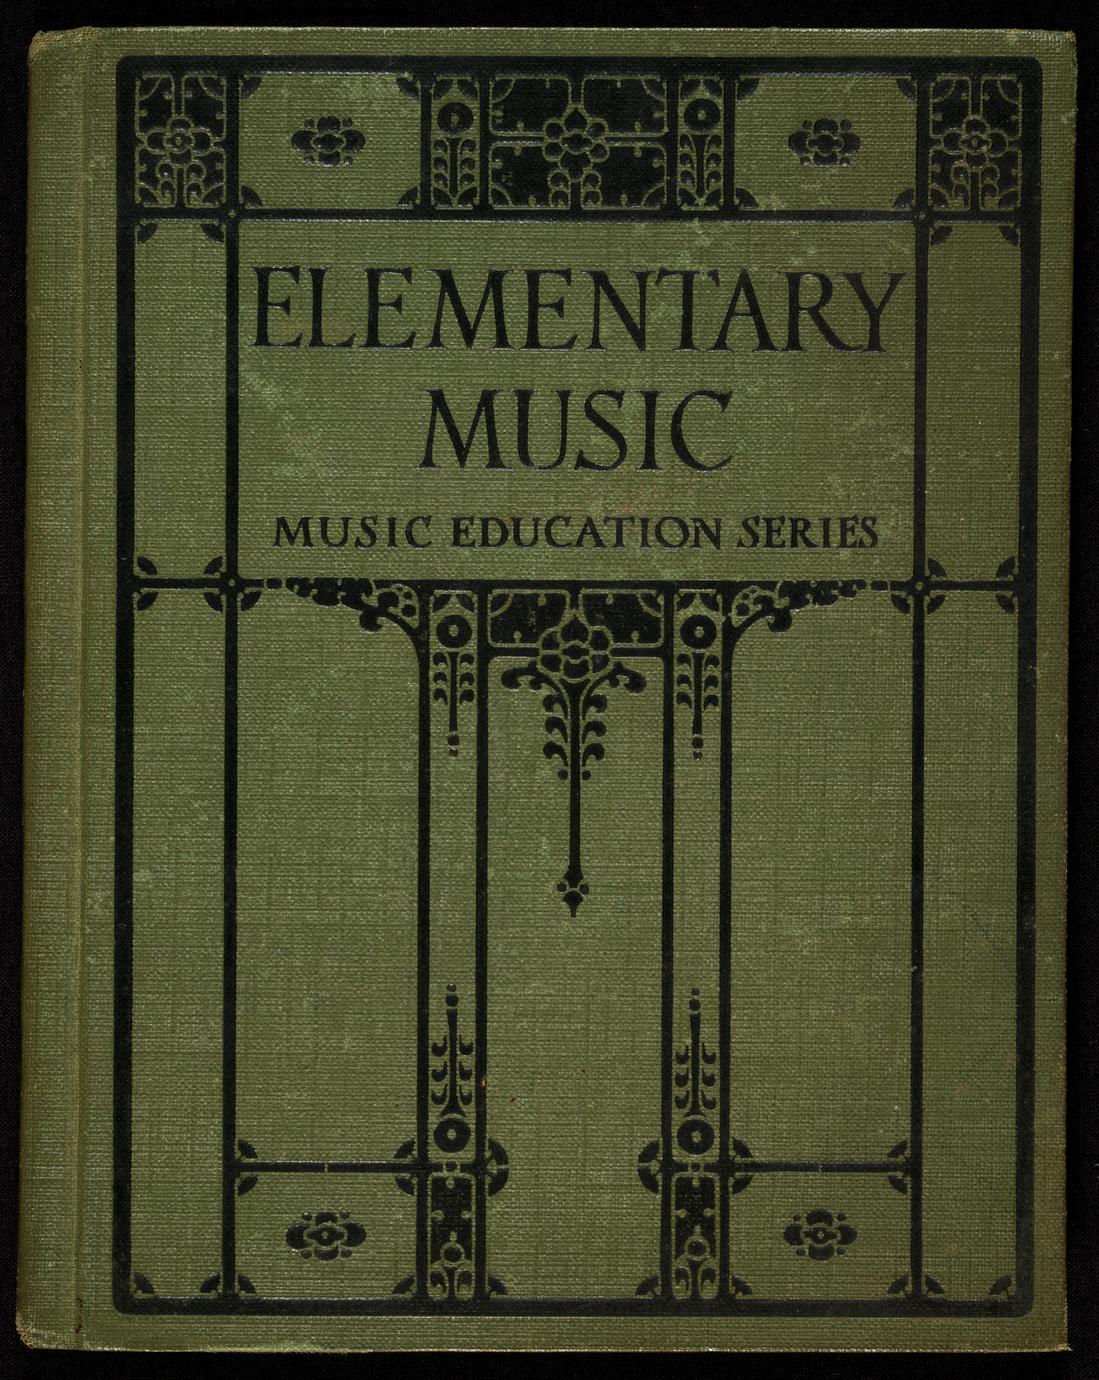 Elementary music (1 of 2)